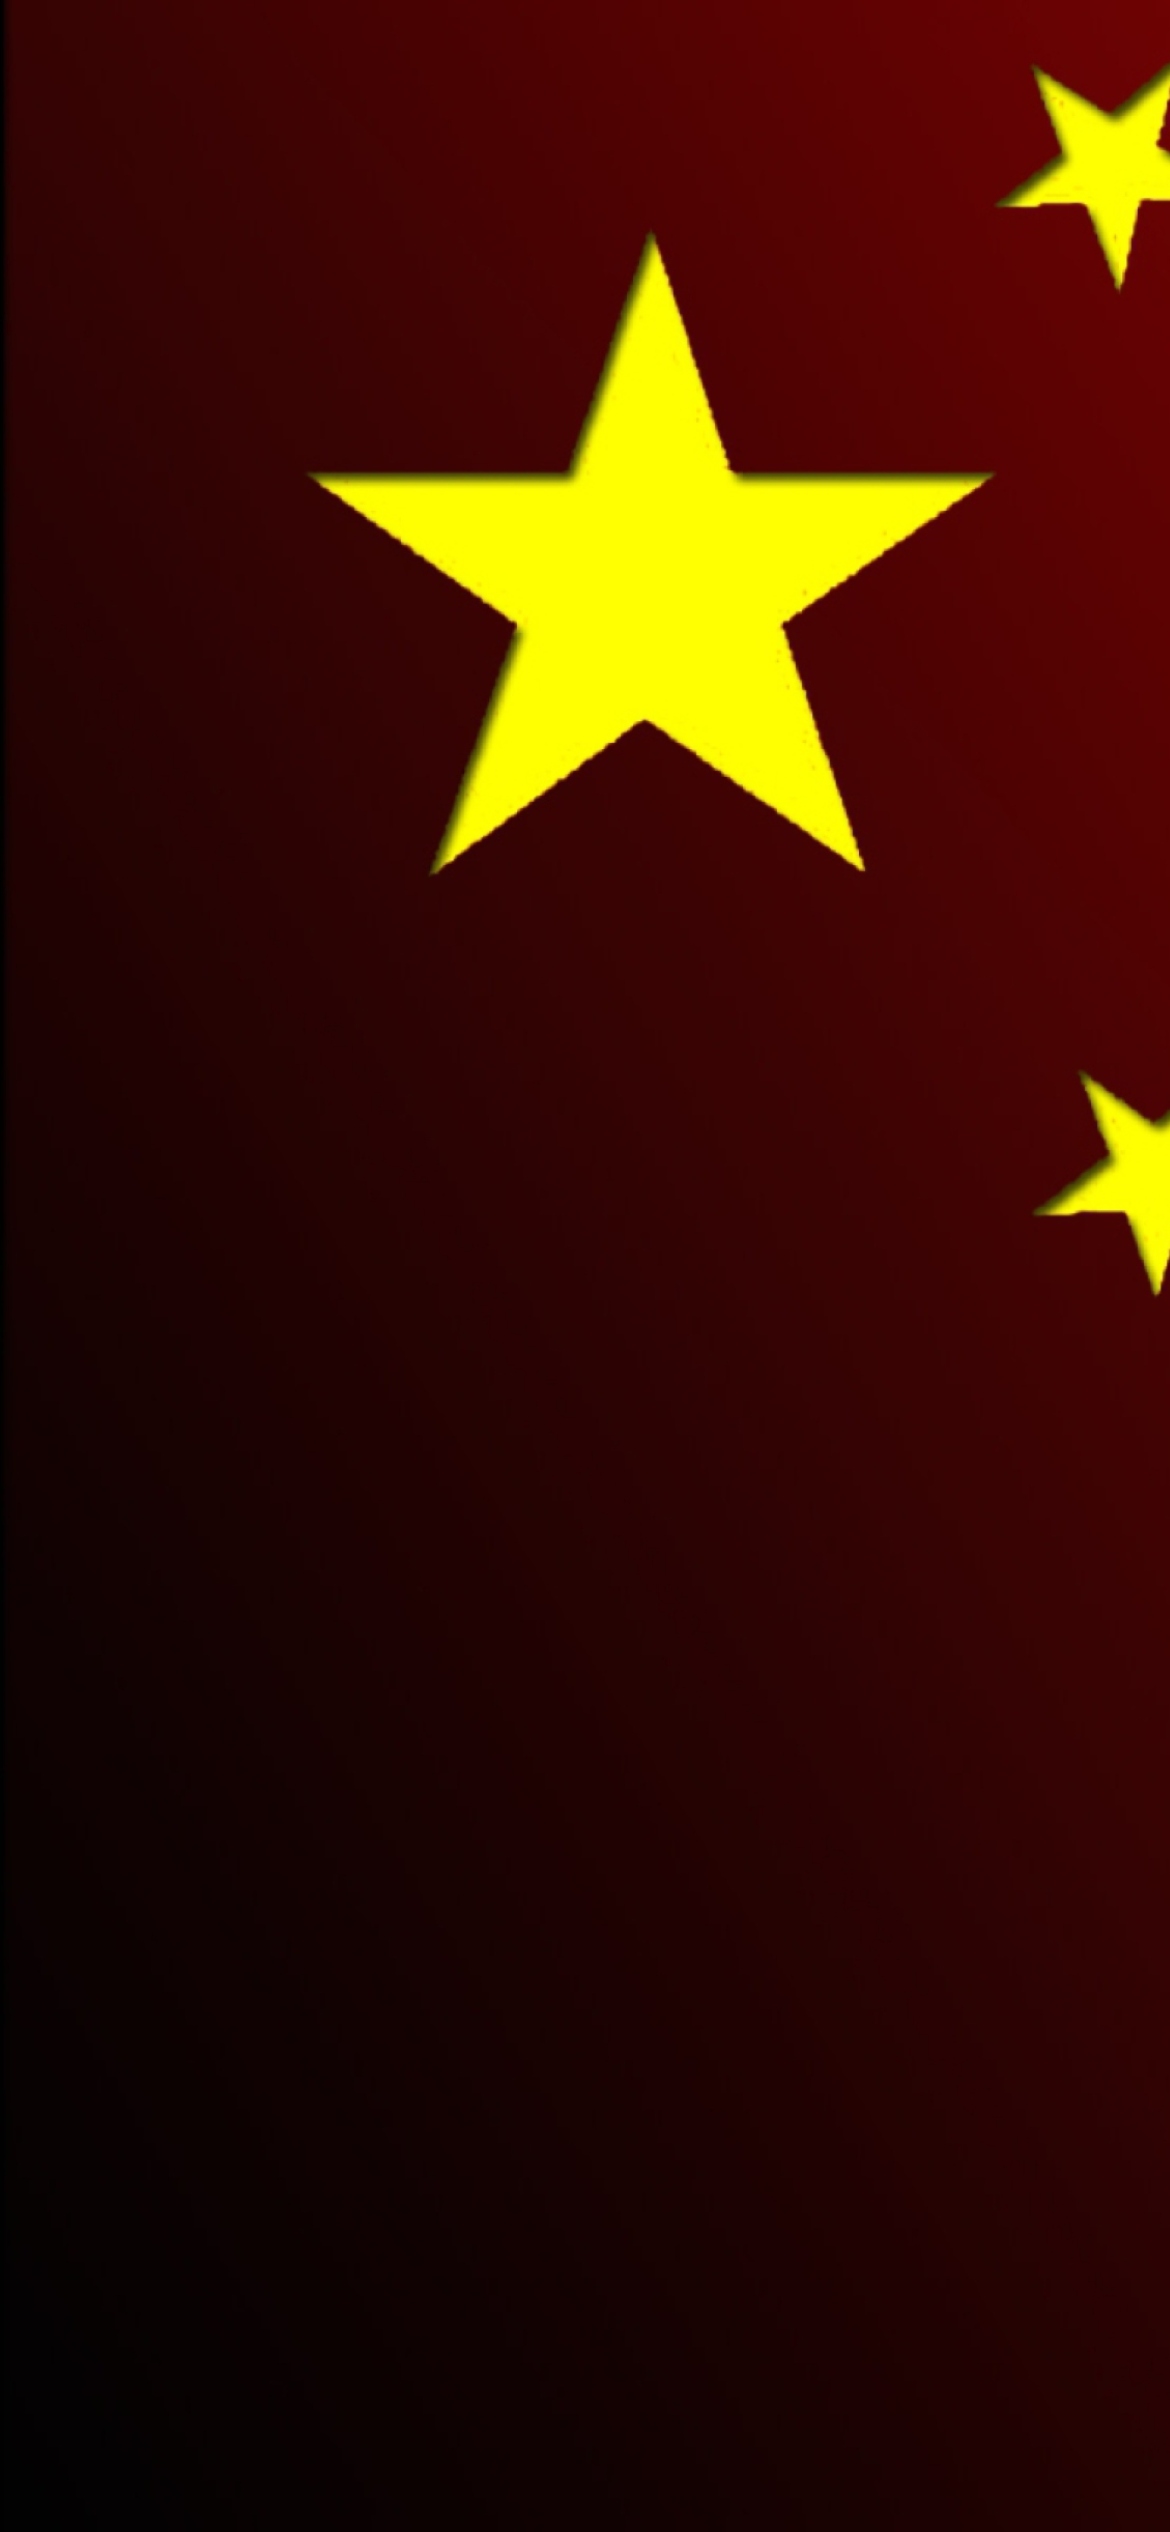 Das China Flag Wallpaper 1170x2532